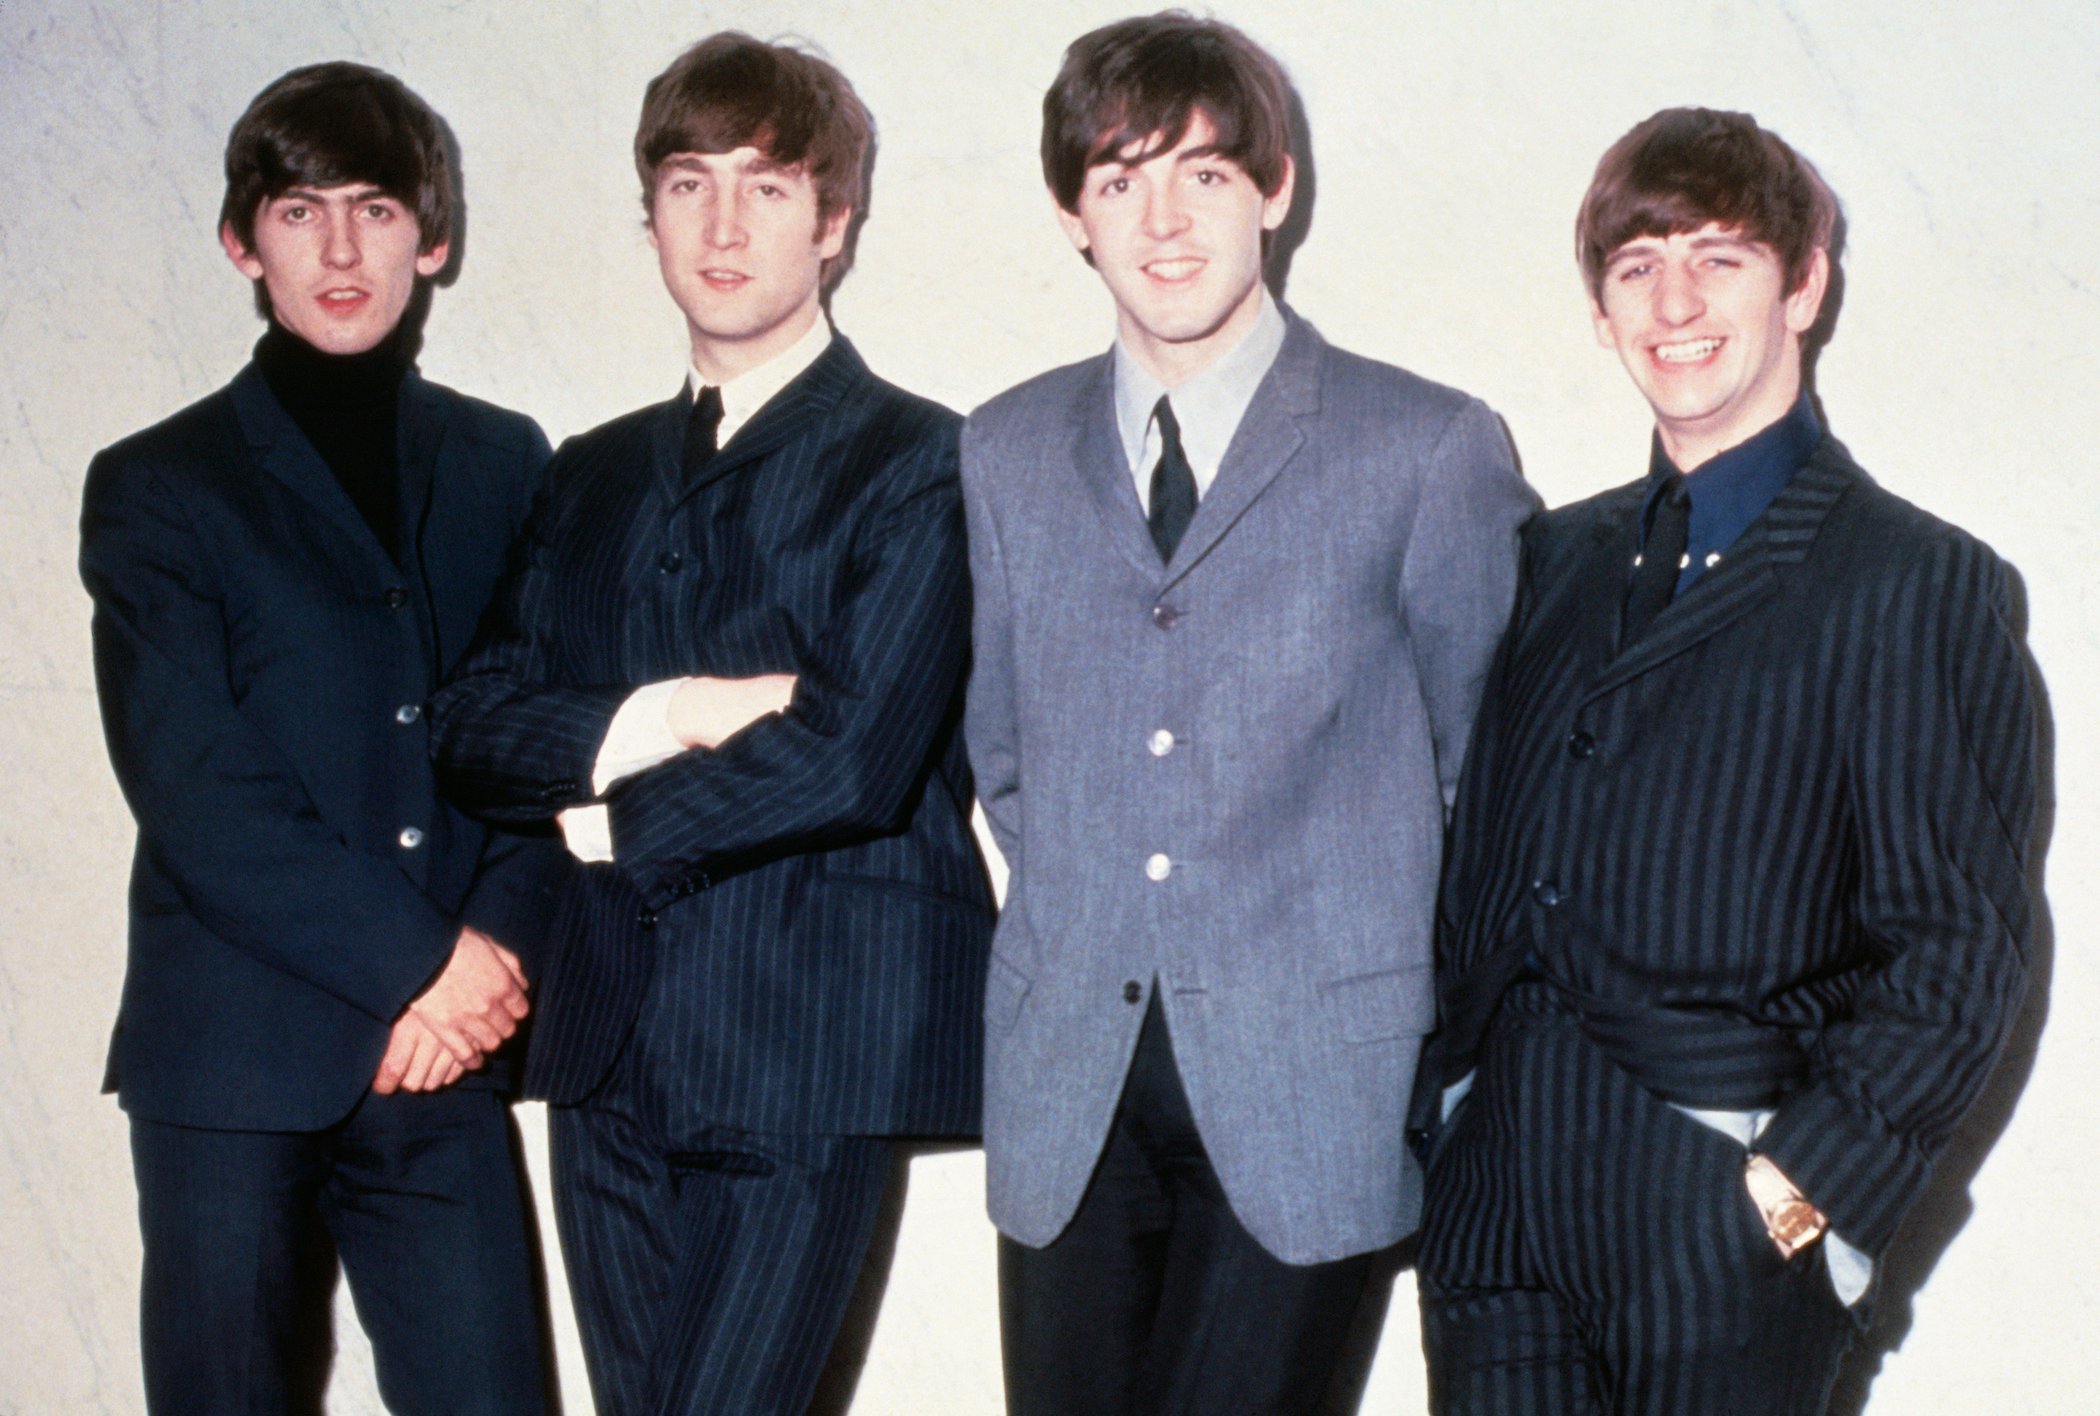 The Beatles posing together, musicians George Harrison, John Lennon, Paul McCartney and Ringo Starr, circa 1965